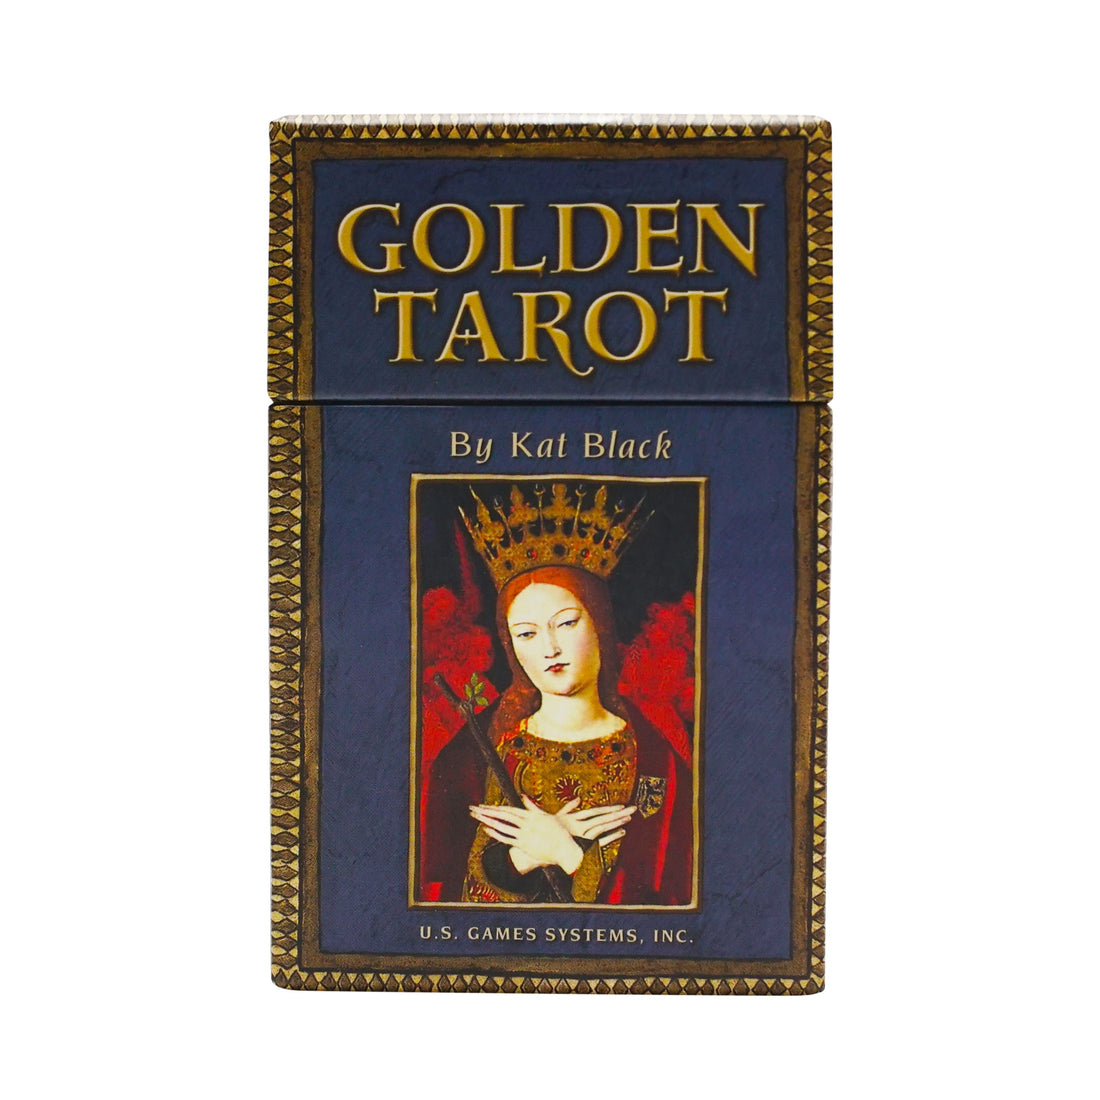 Golden Tarot Deck Cards Tarot Cards Non-HOI 